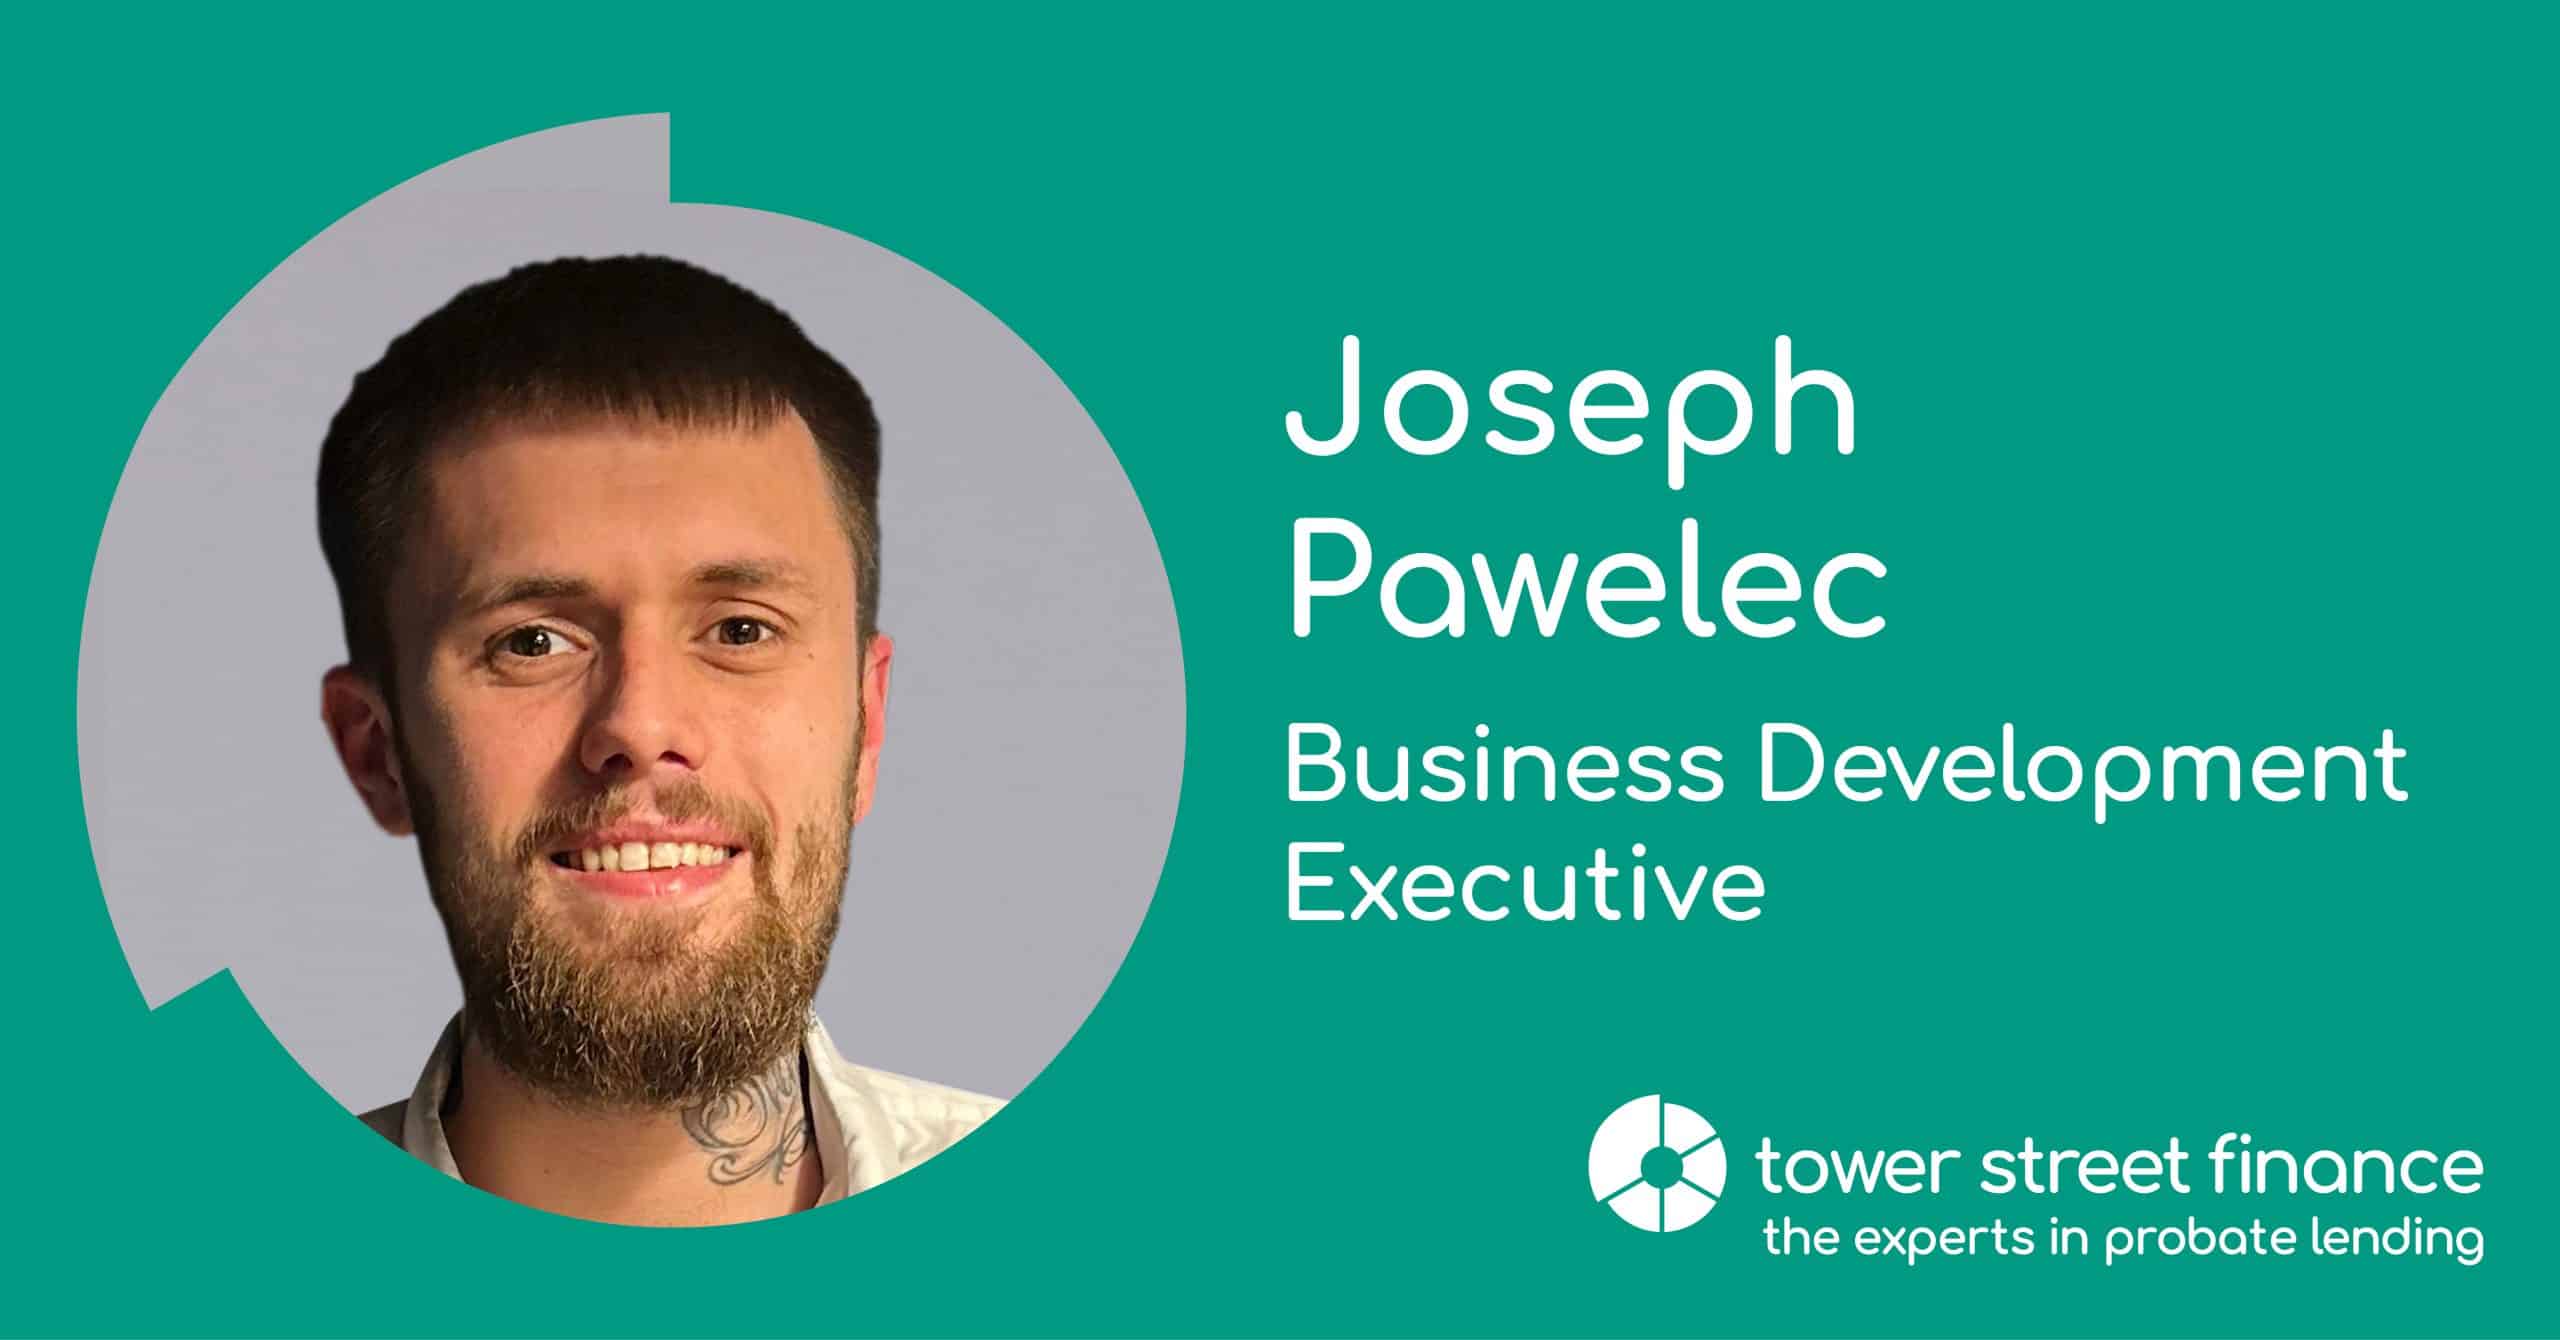 Joseph joins Tower Street Finance